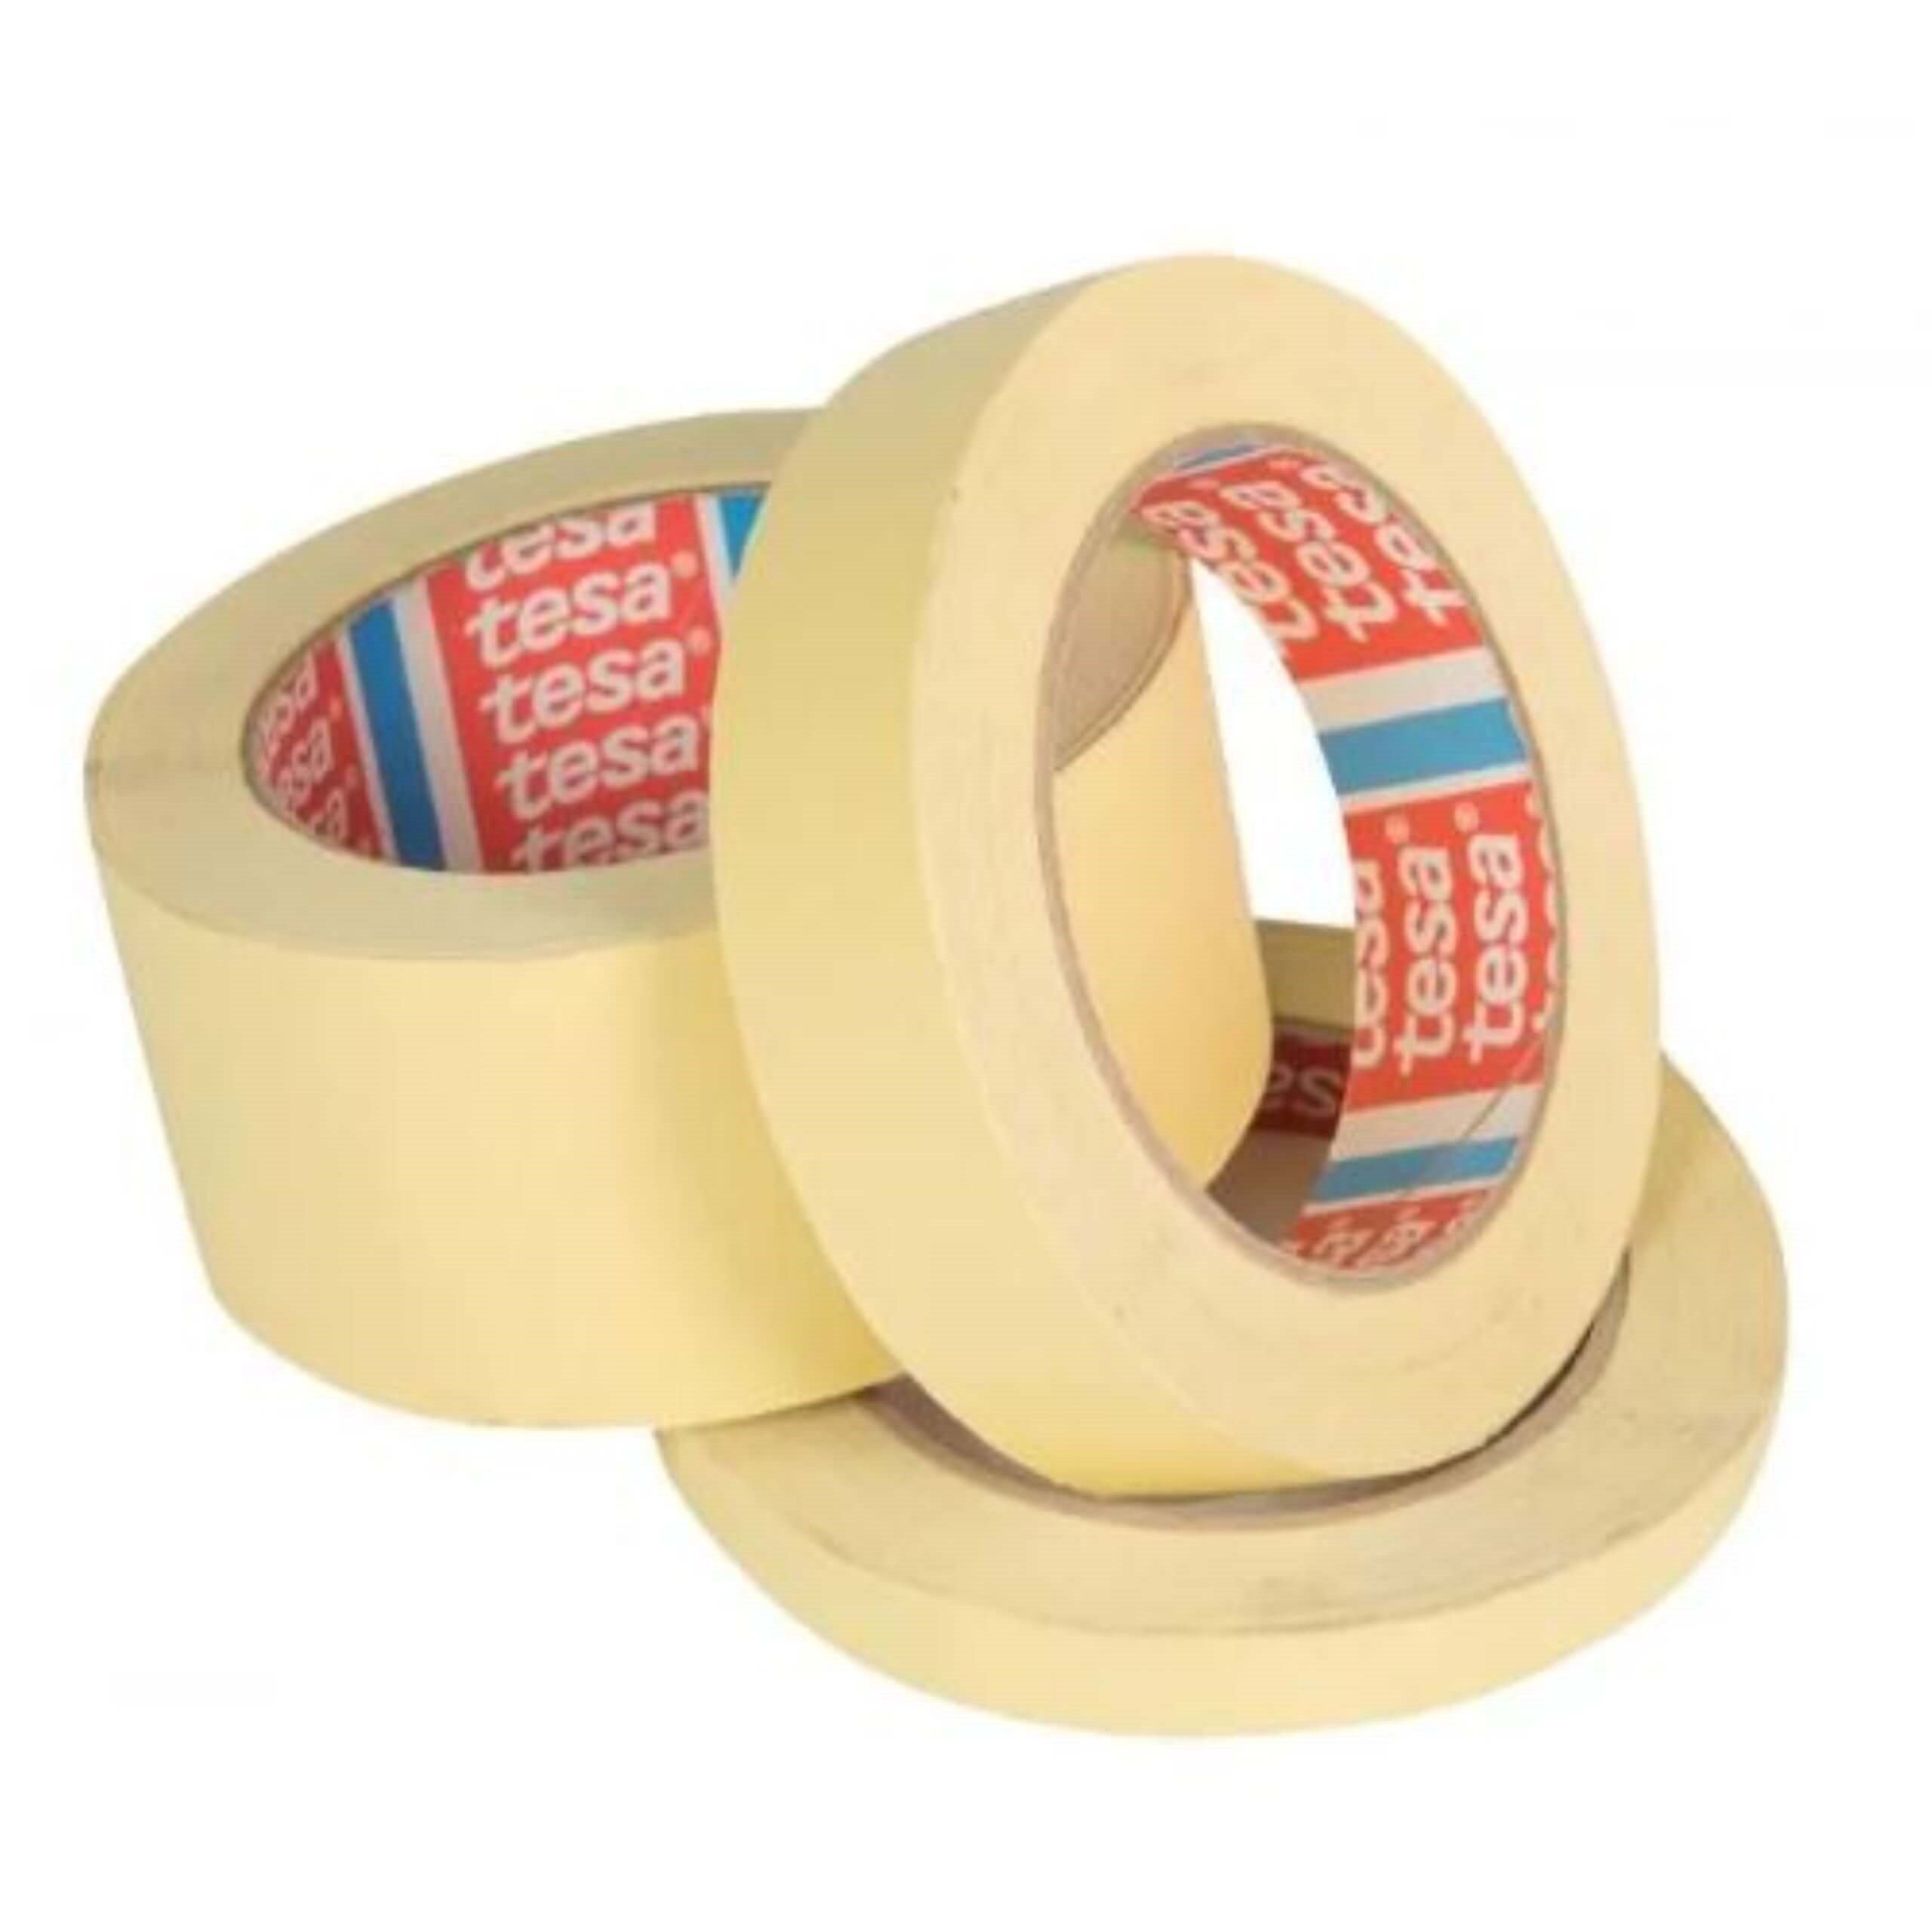 An image of masking tape.